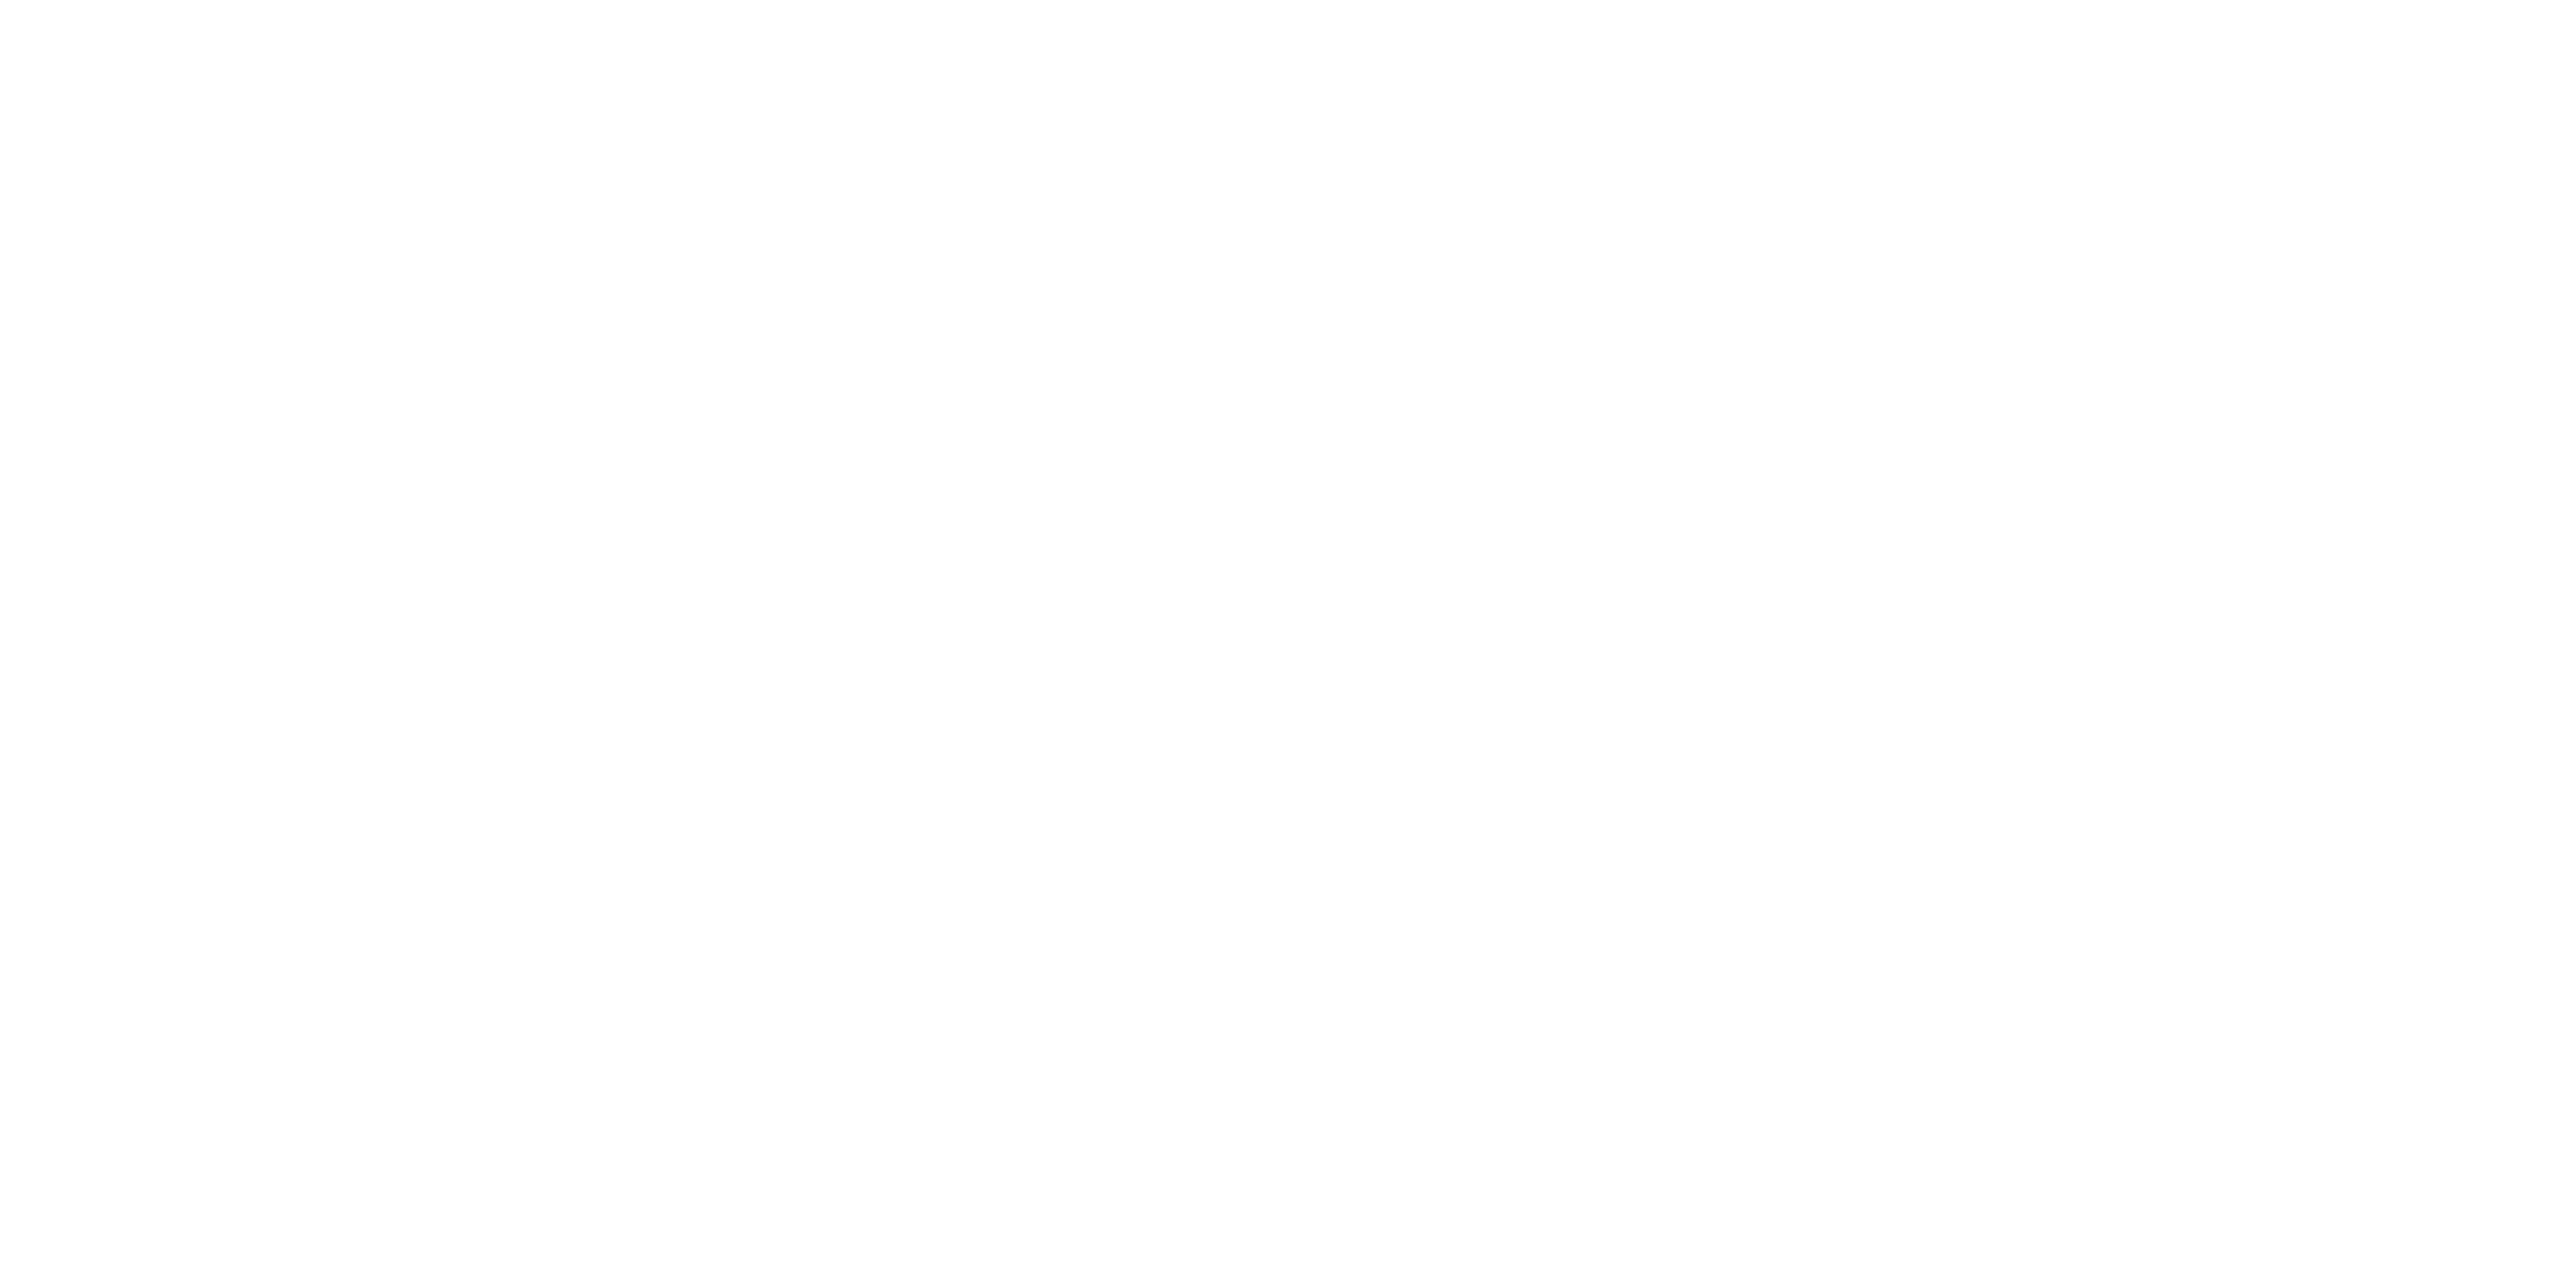 日本AMD株式会社